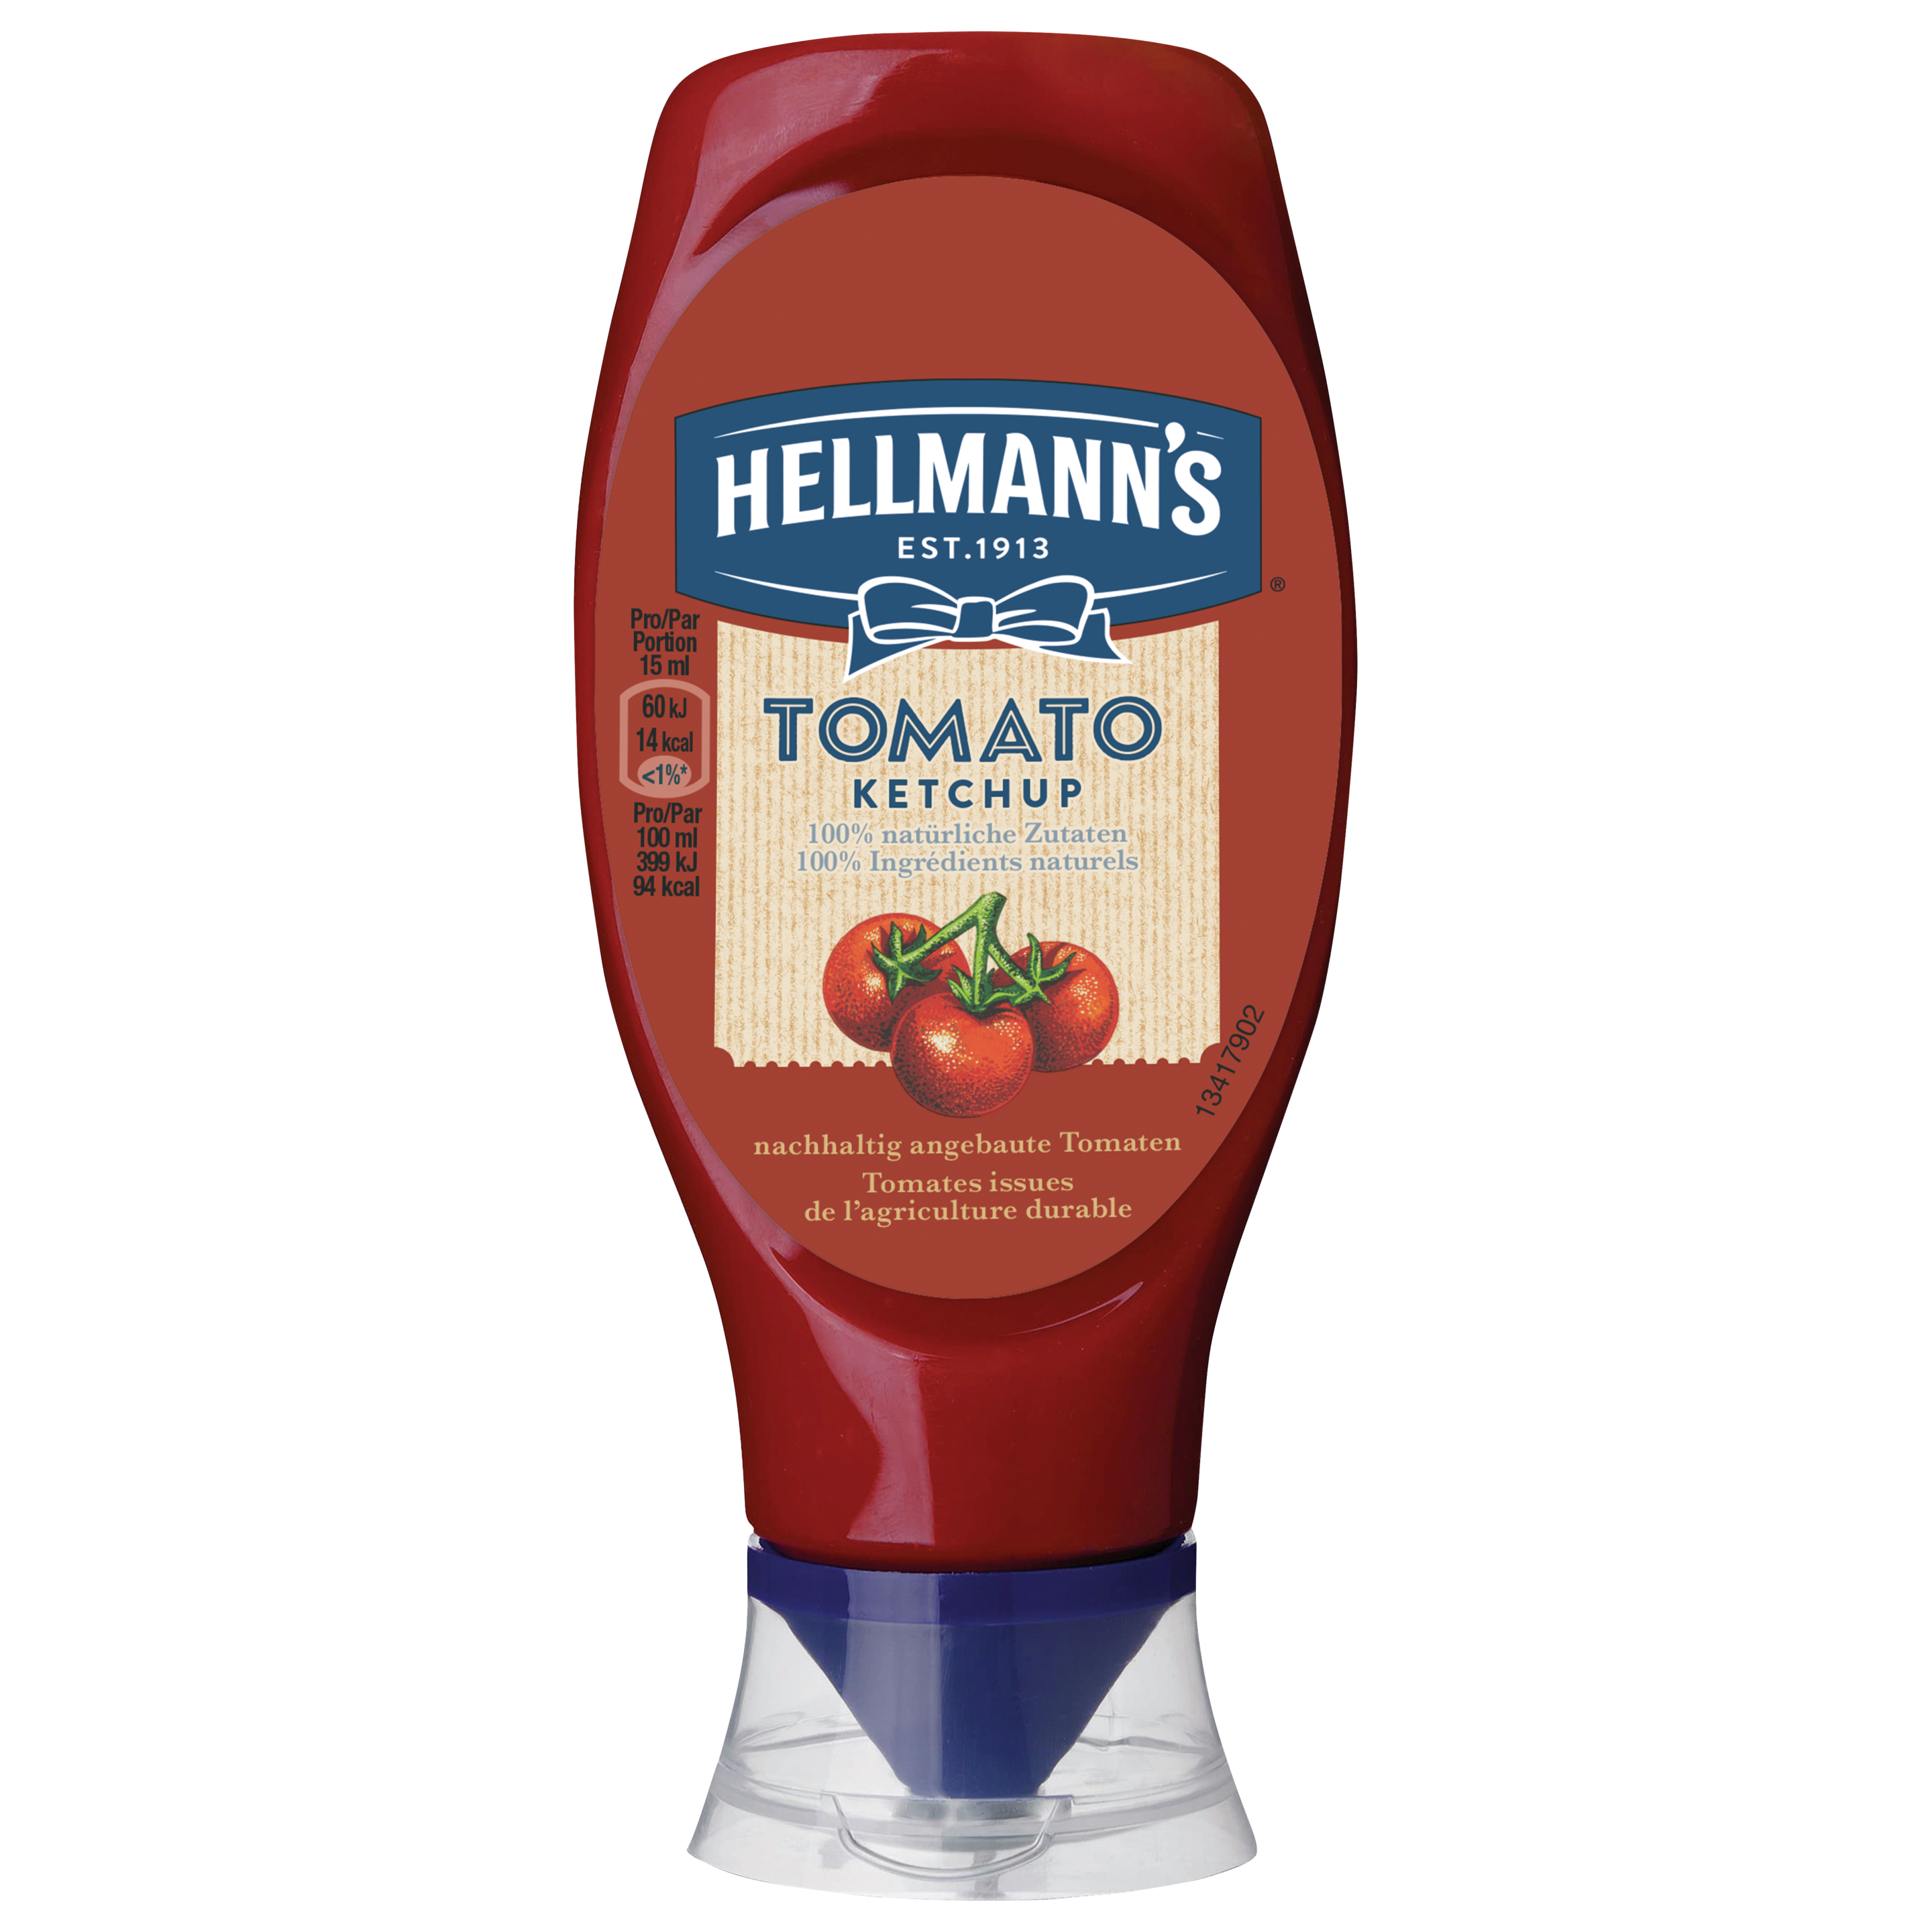 Hellmann’s Tomato Ketchup